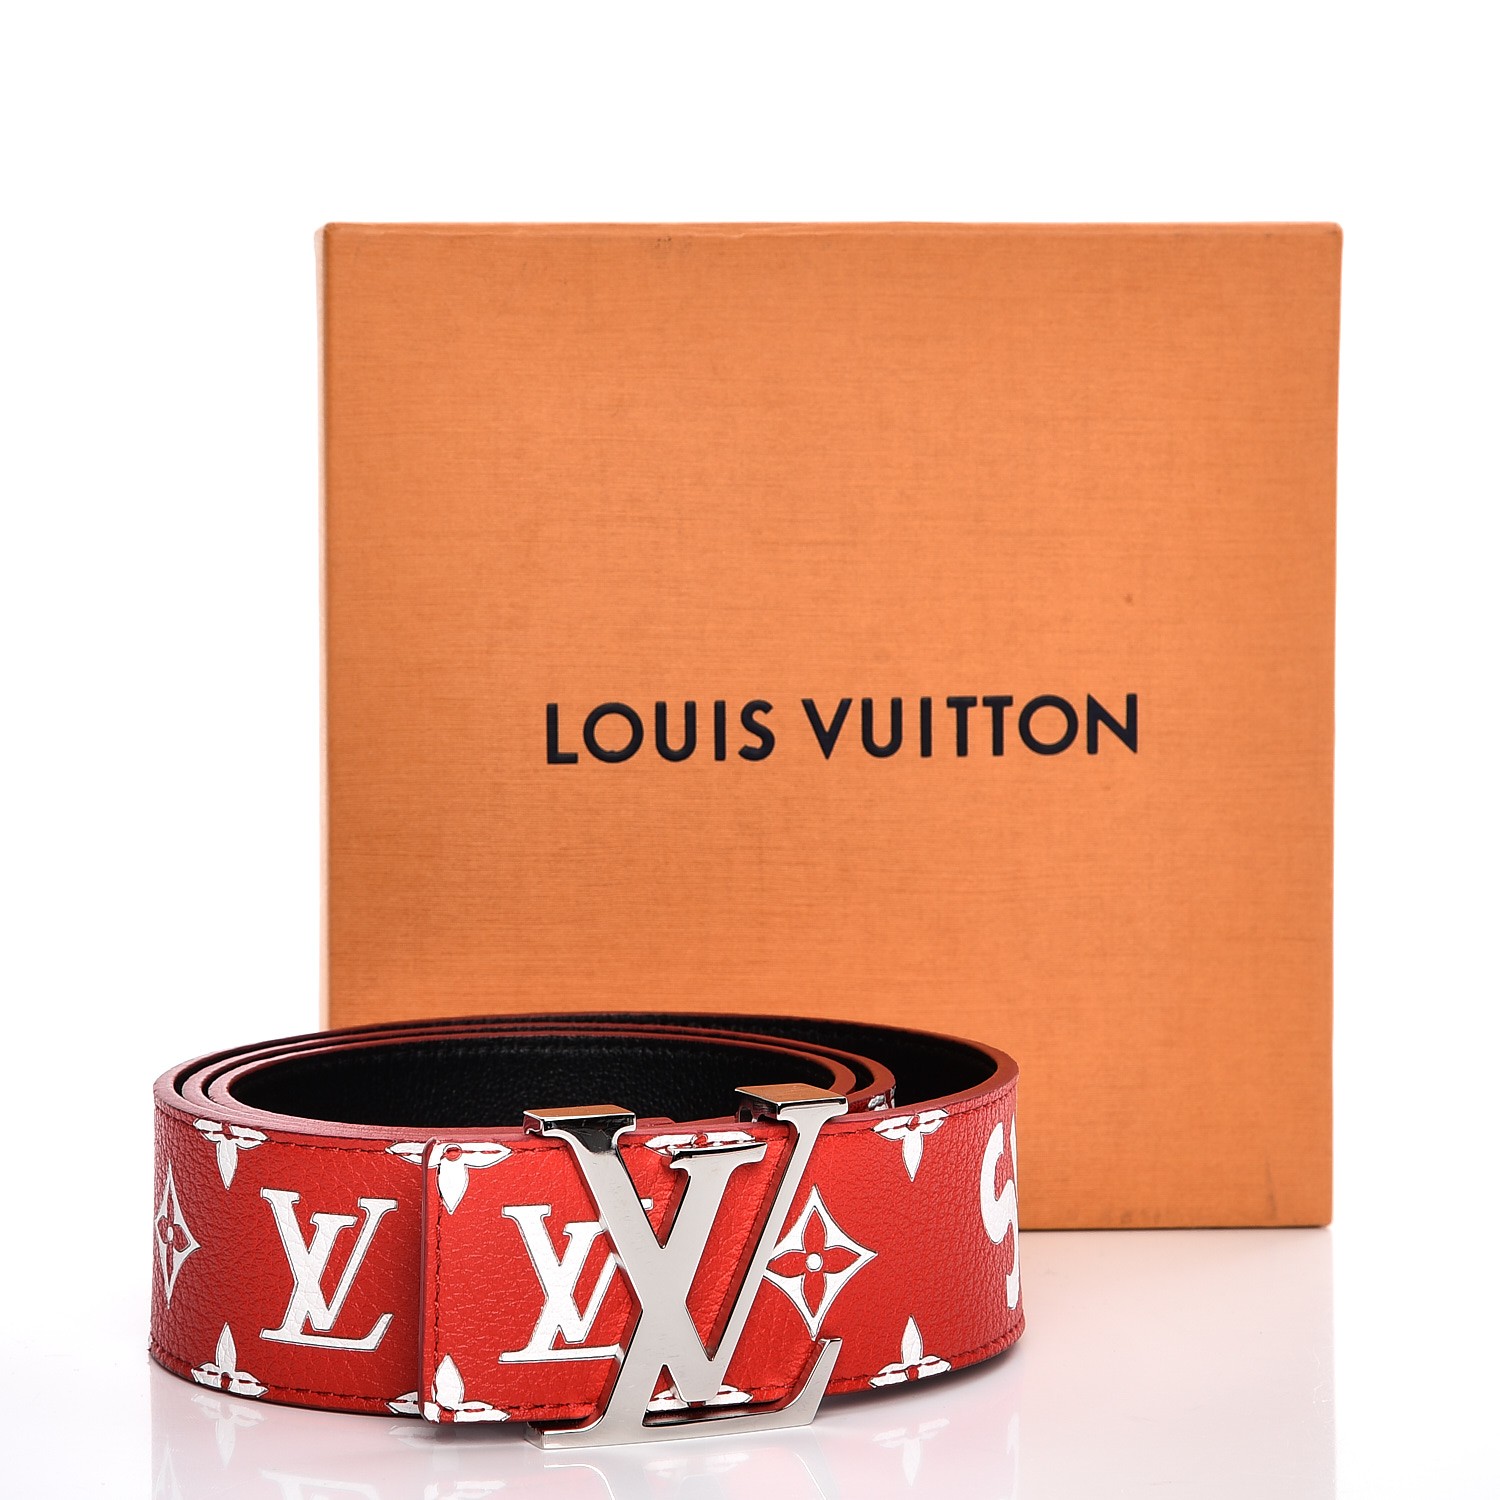 Louis Vuitton x Supreme 2017 Initiales 40MM Belt - Red Belts